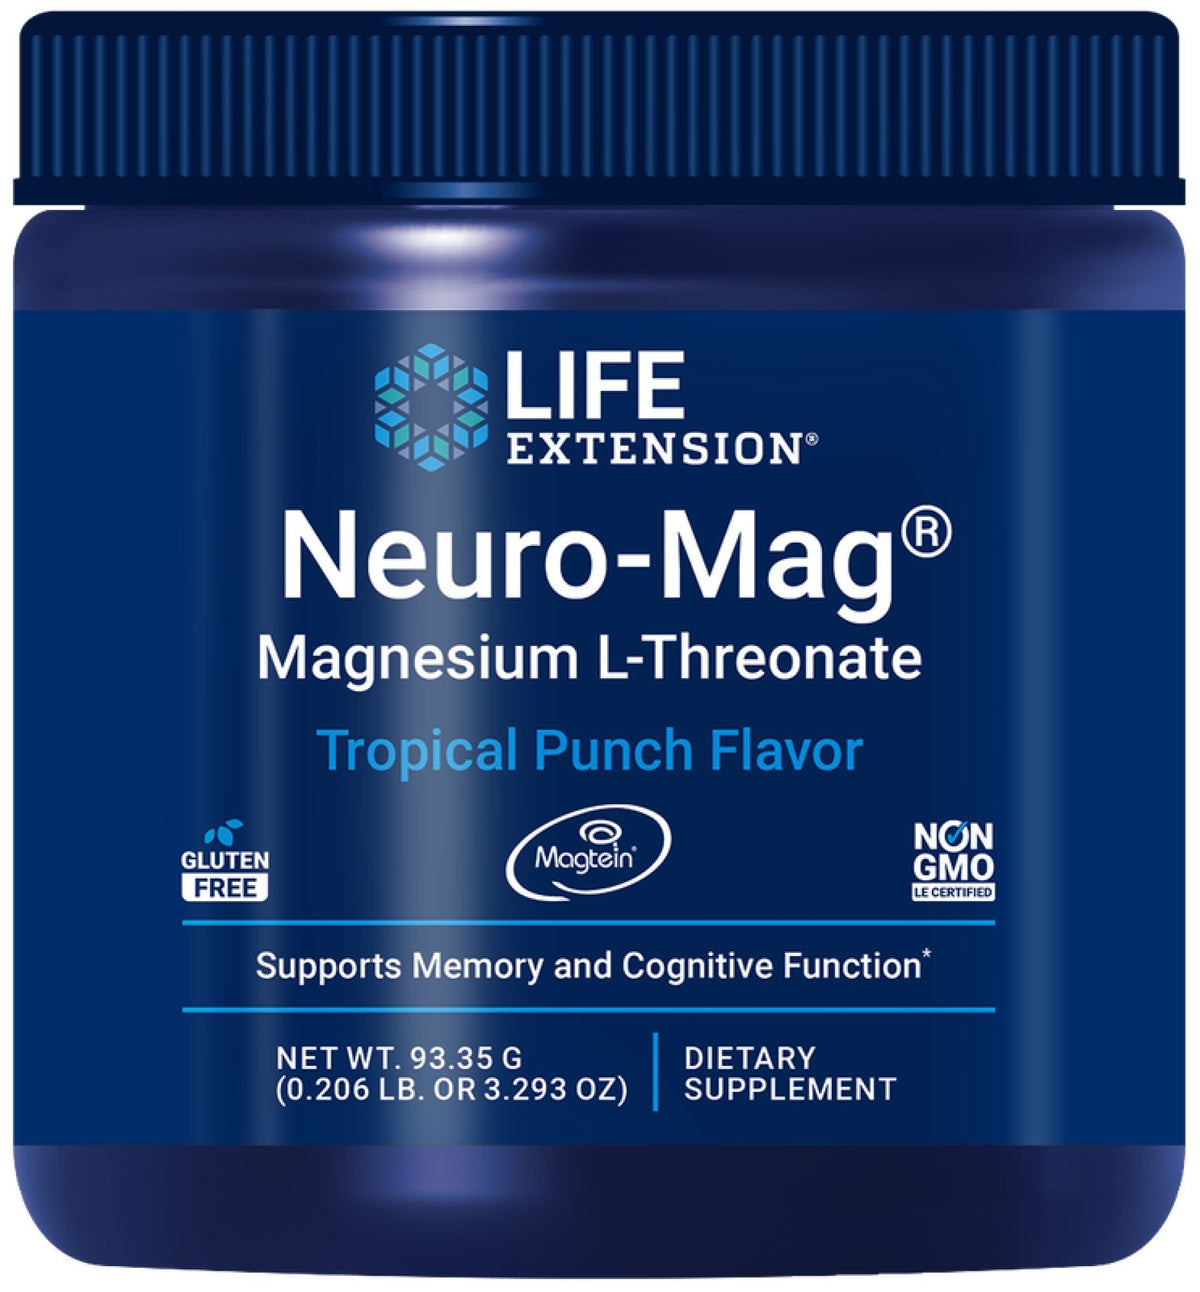 Life Extension Neuro-Mag Magnesium L-Threonate 93.35g (0.206 lb or Powder